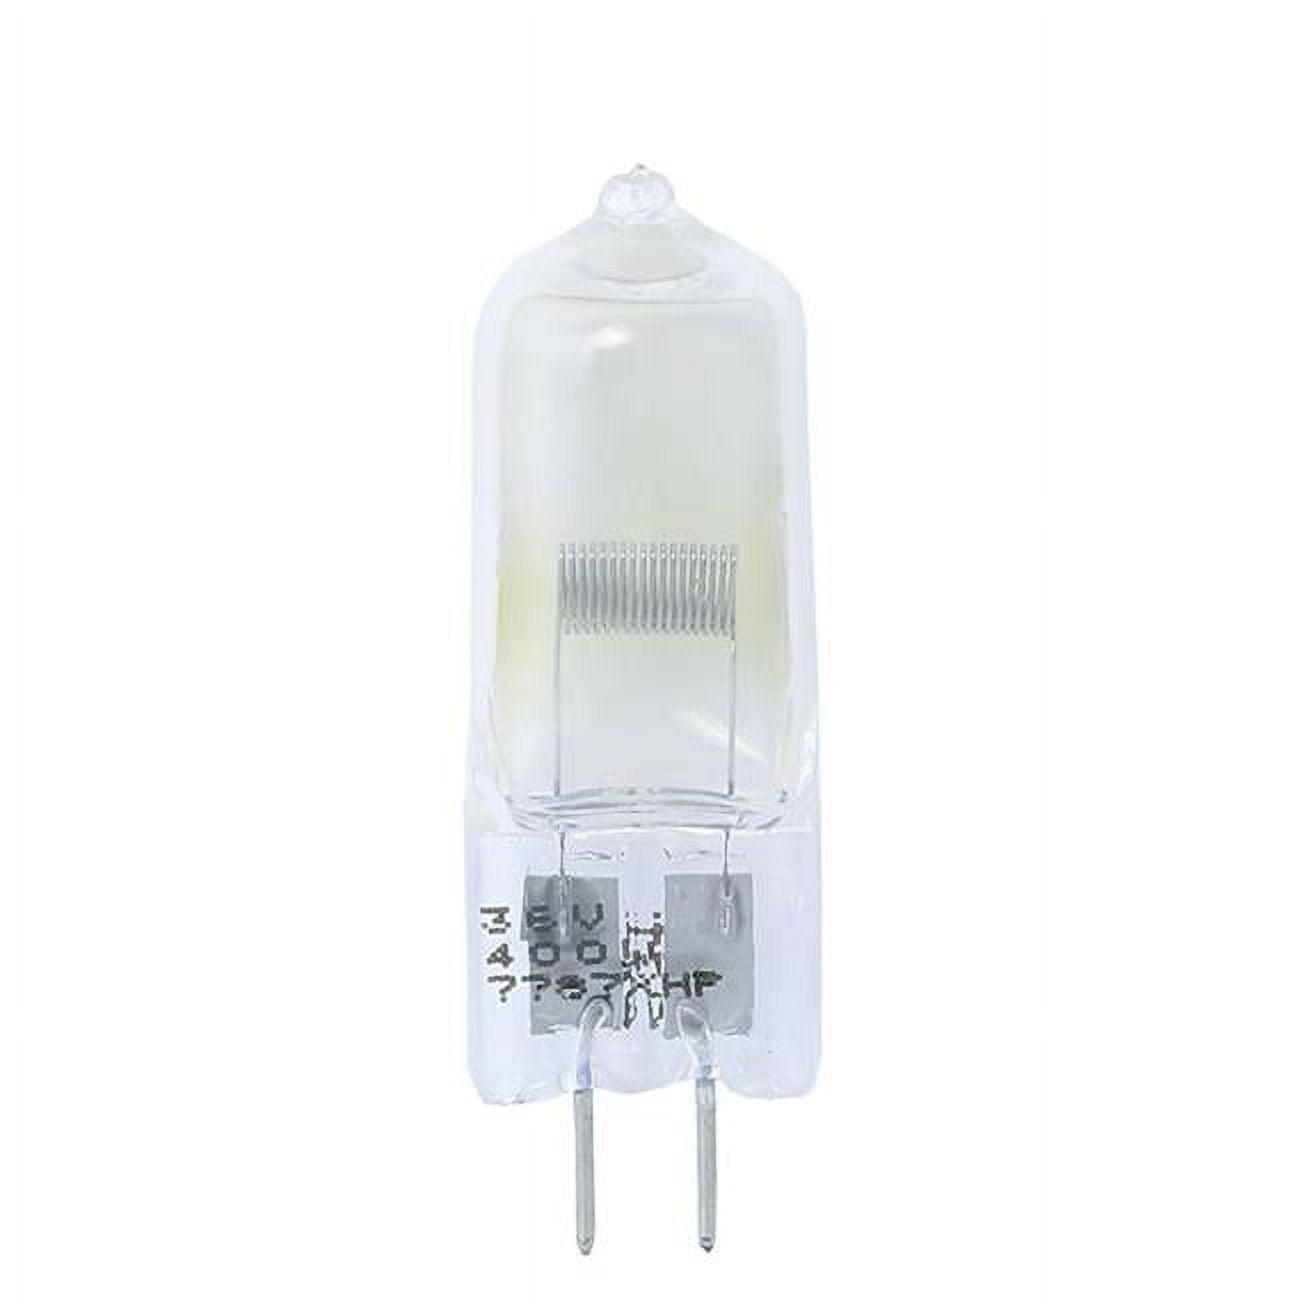 Dny-170210 Halogen Non-reflector 7787xhp 400w Gy6.35 36v Light Bulb